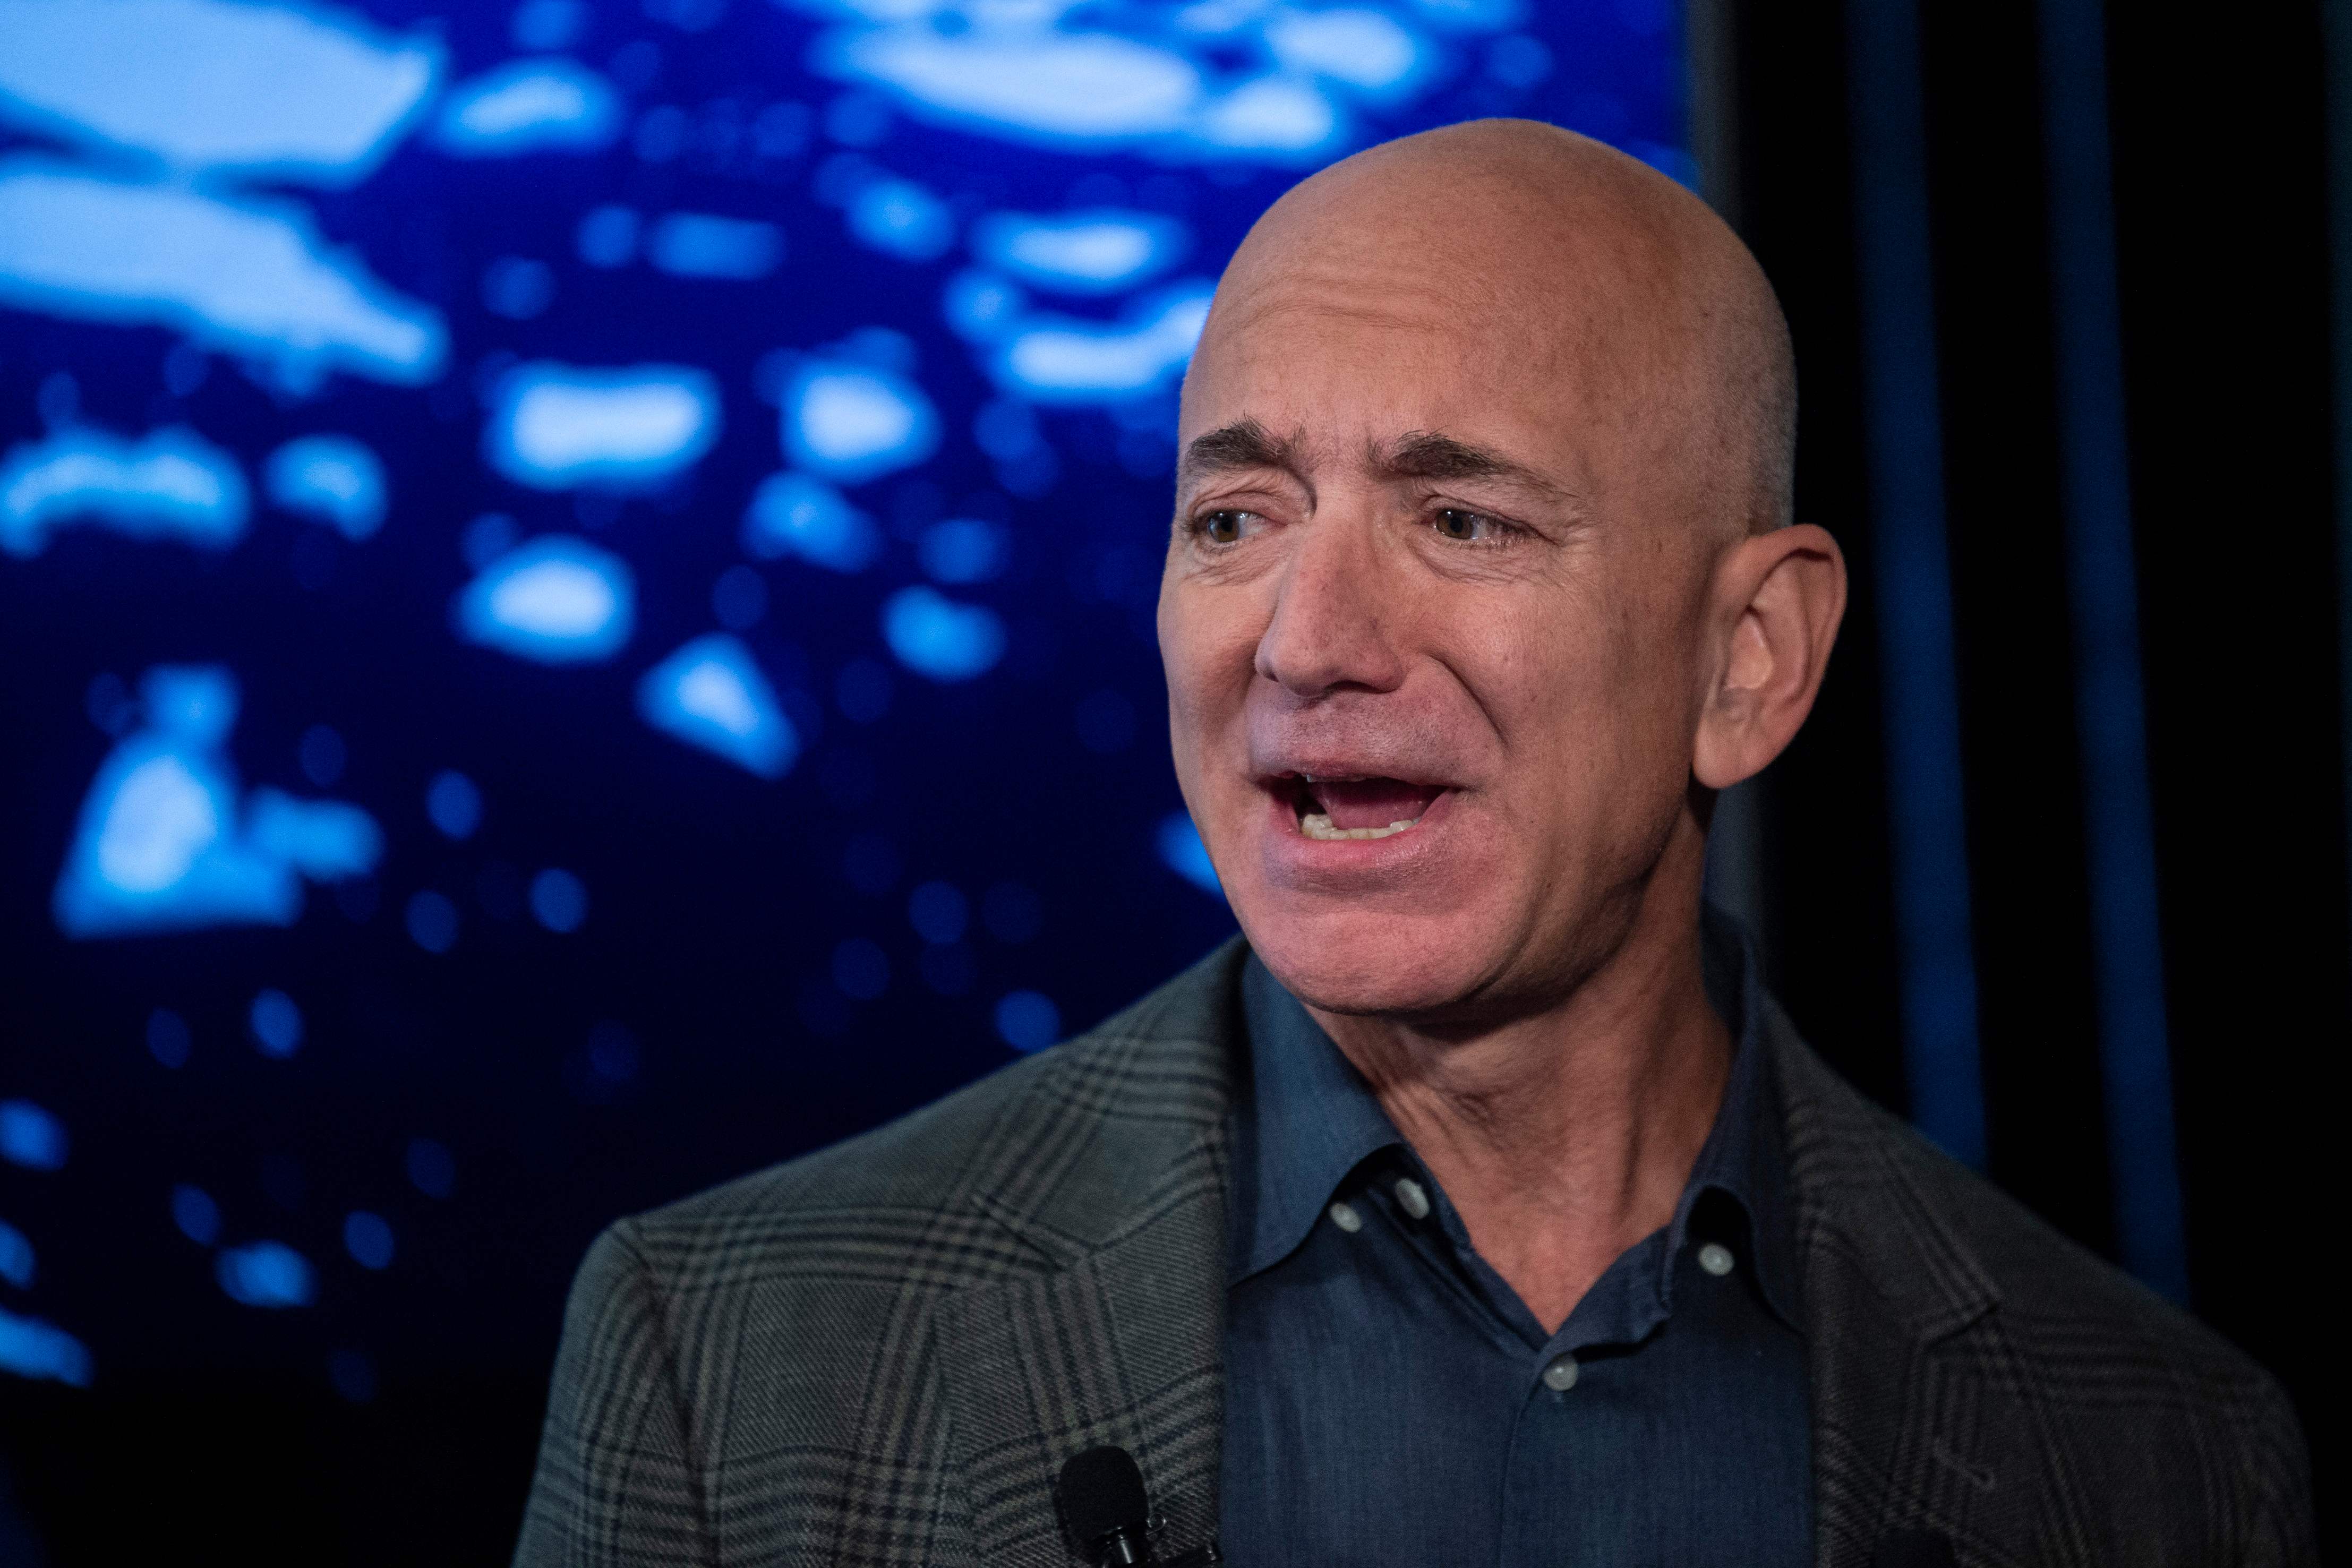 File: Jeff Bezos speaks to the media on Amazon’s sustainability efforts on 19 September, 2019 in Washington